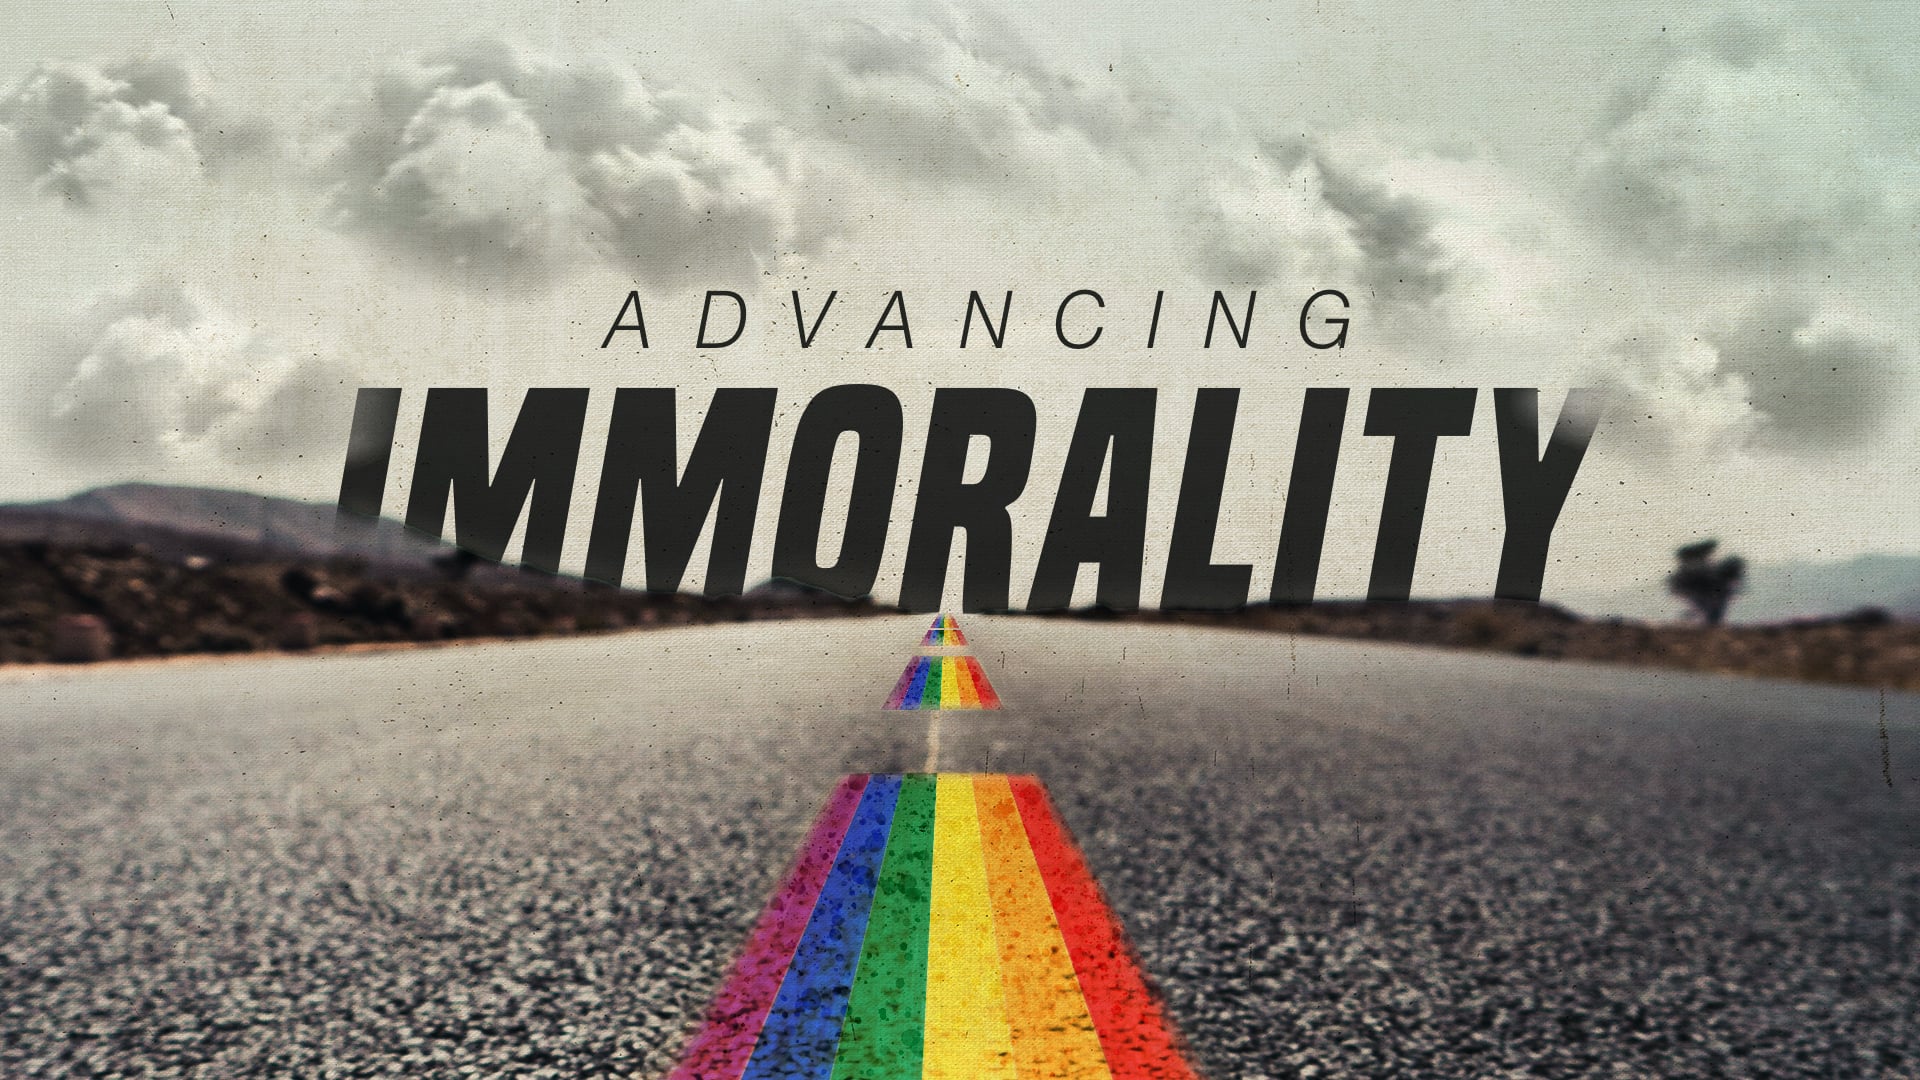 Advancing Immorality